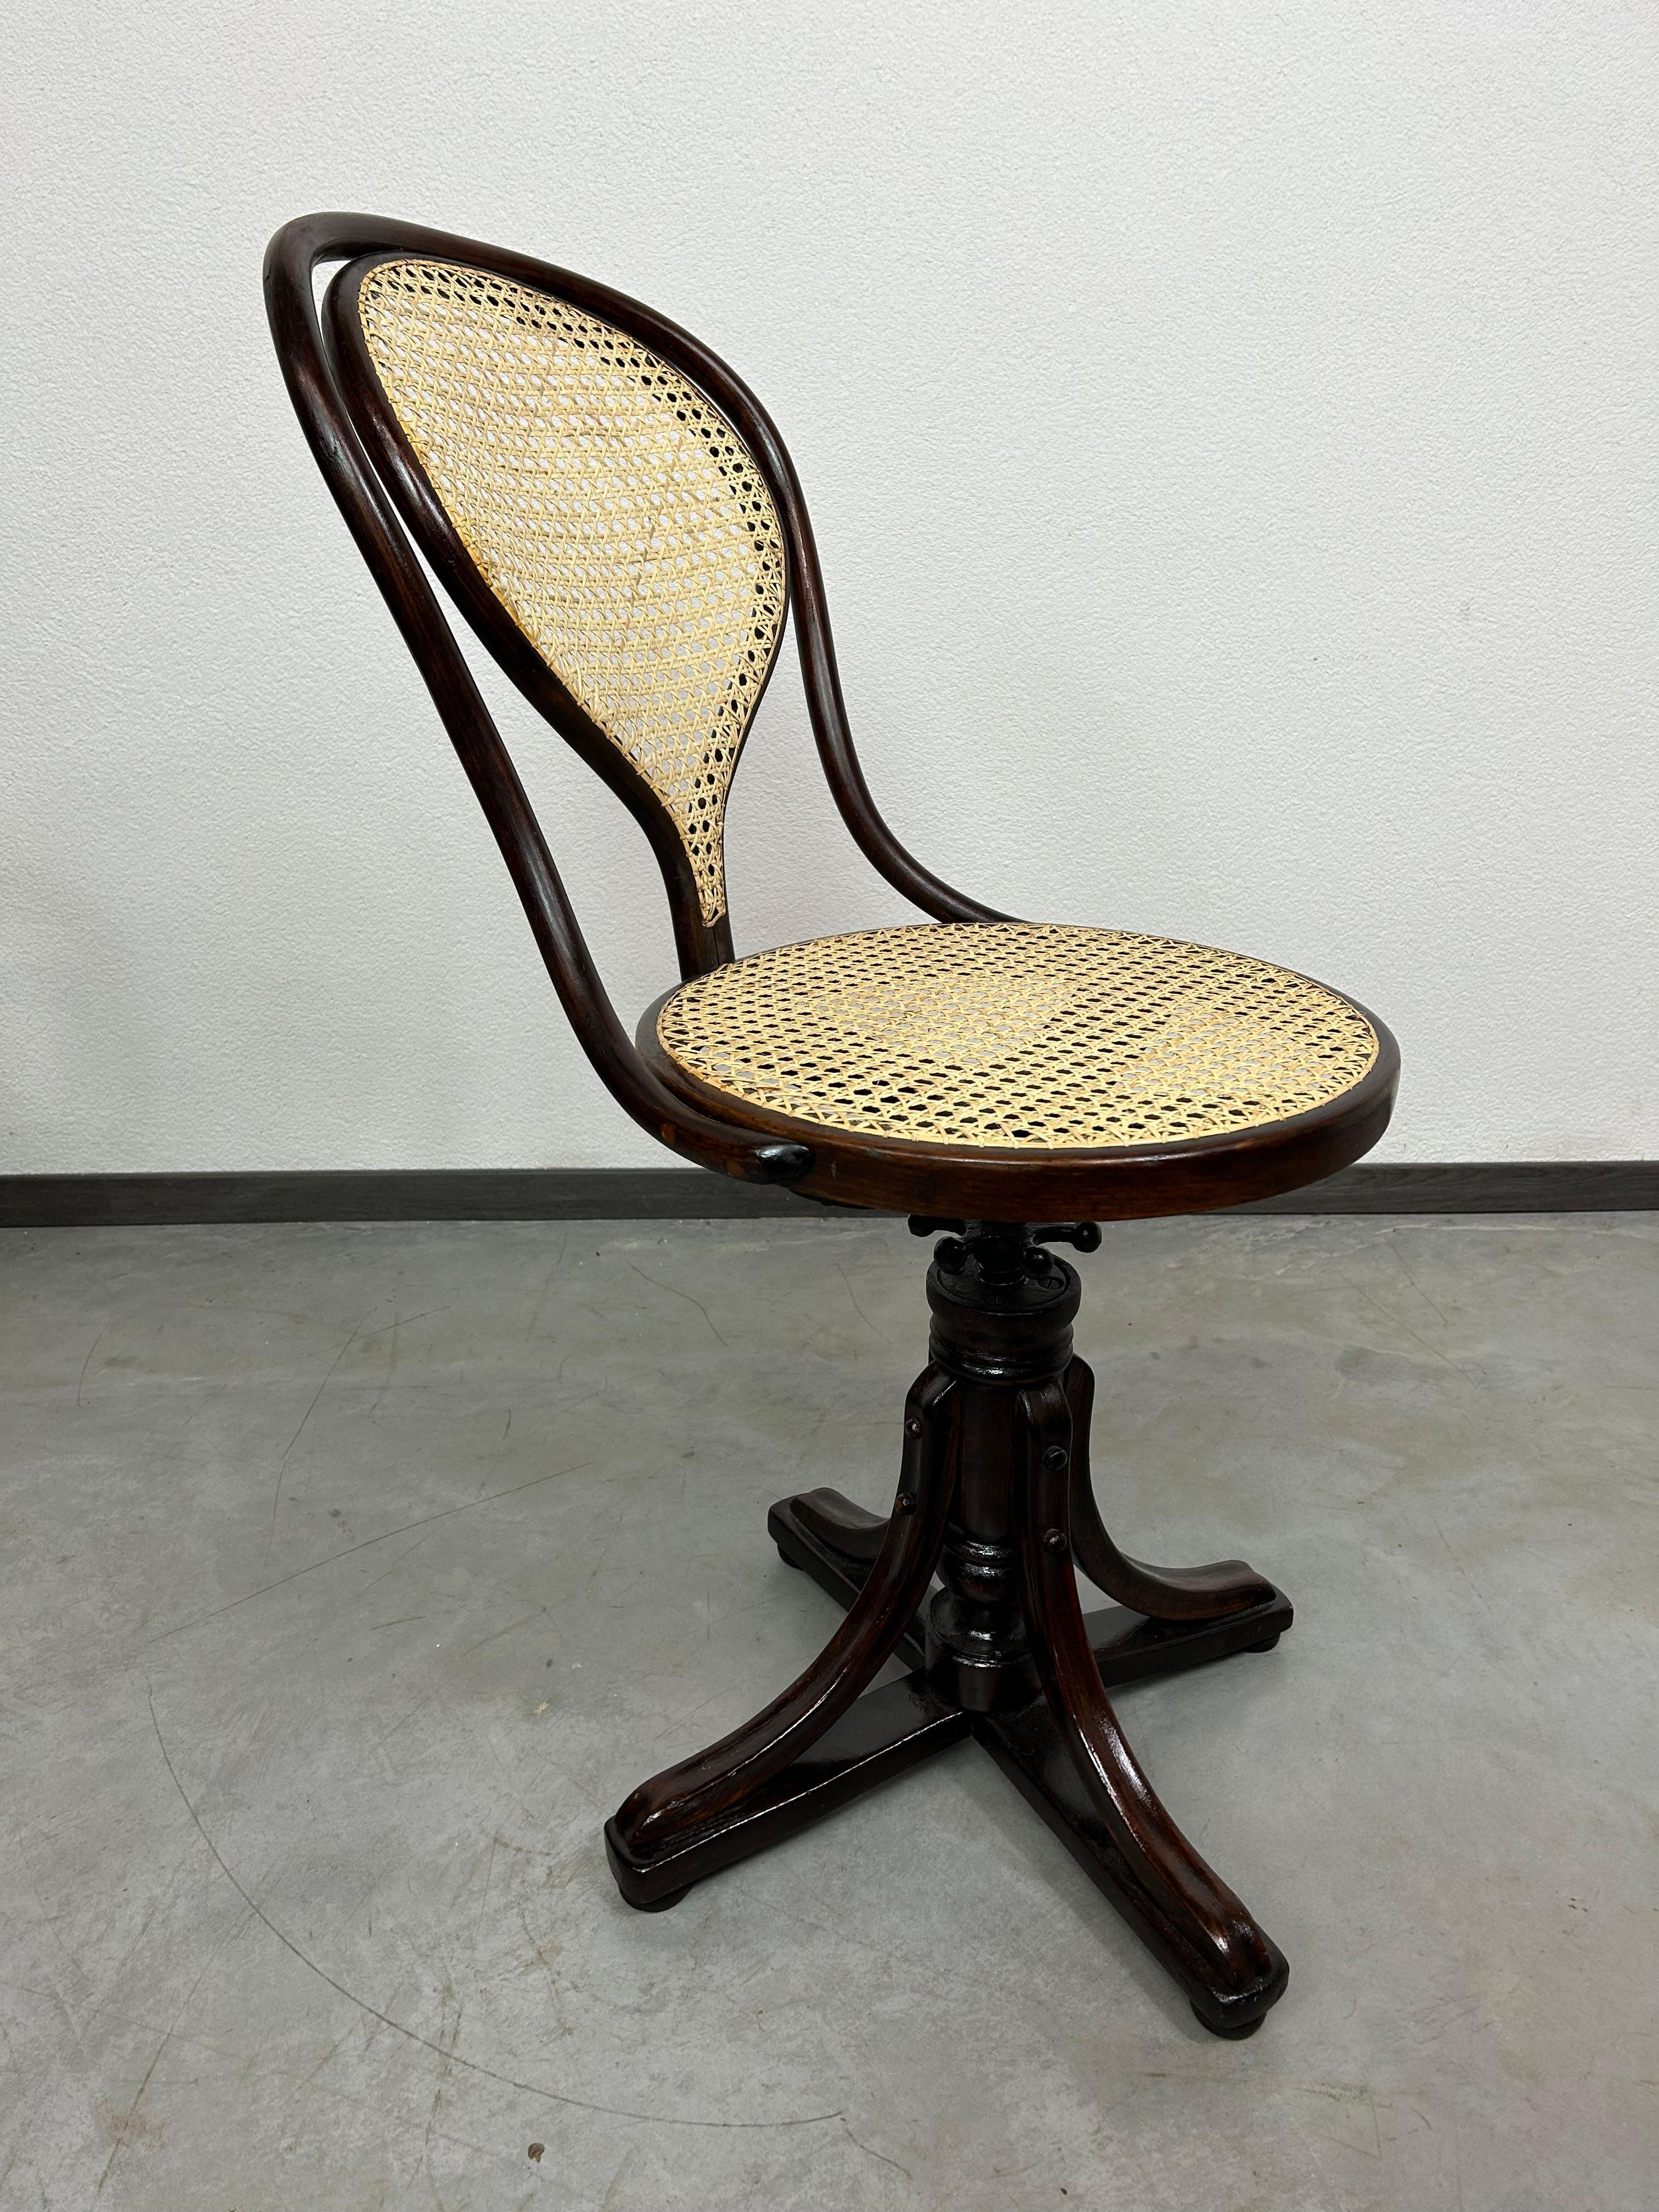 Bentwood swivel chair no.9 by J.J.Kohn new handmade rattan seat.
